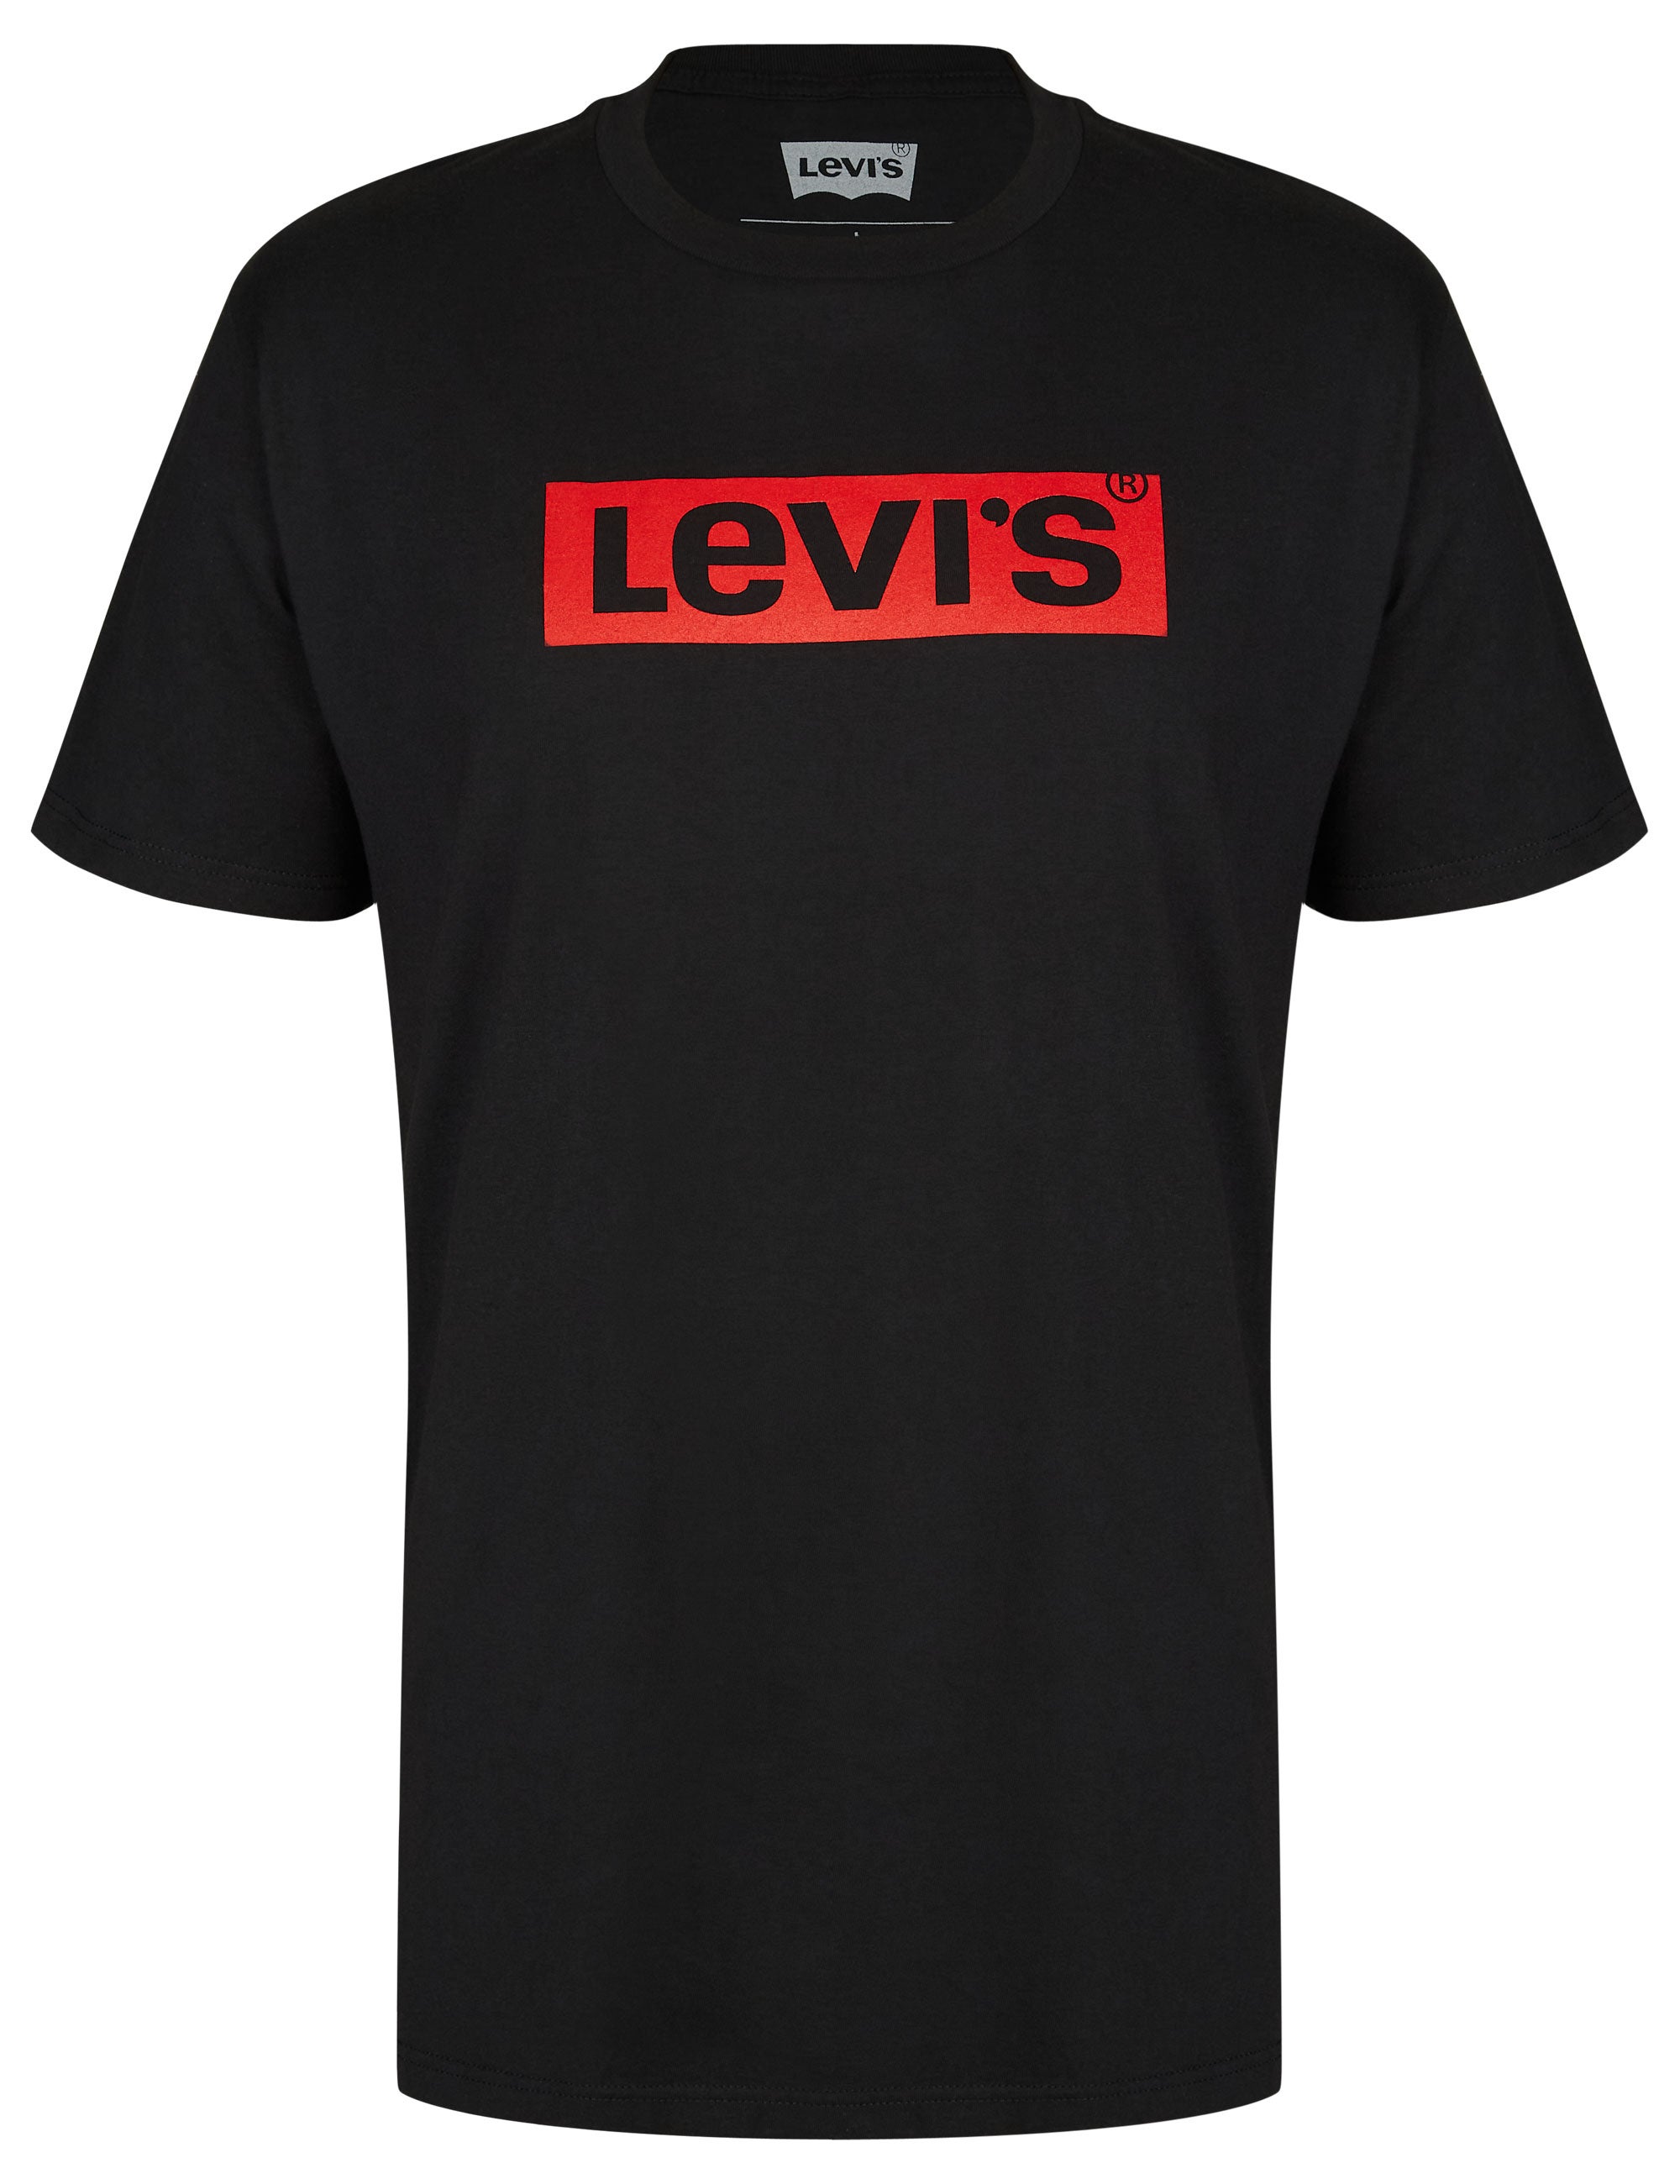 Levis Mens Box Tab Short Sleeve Tee | Rivers Australia